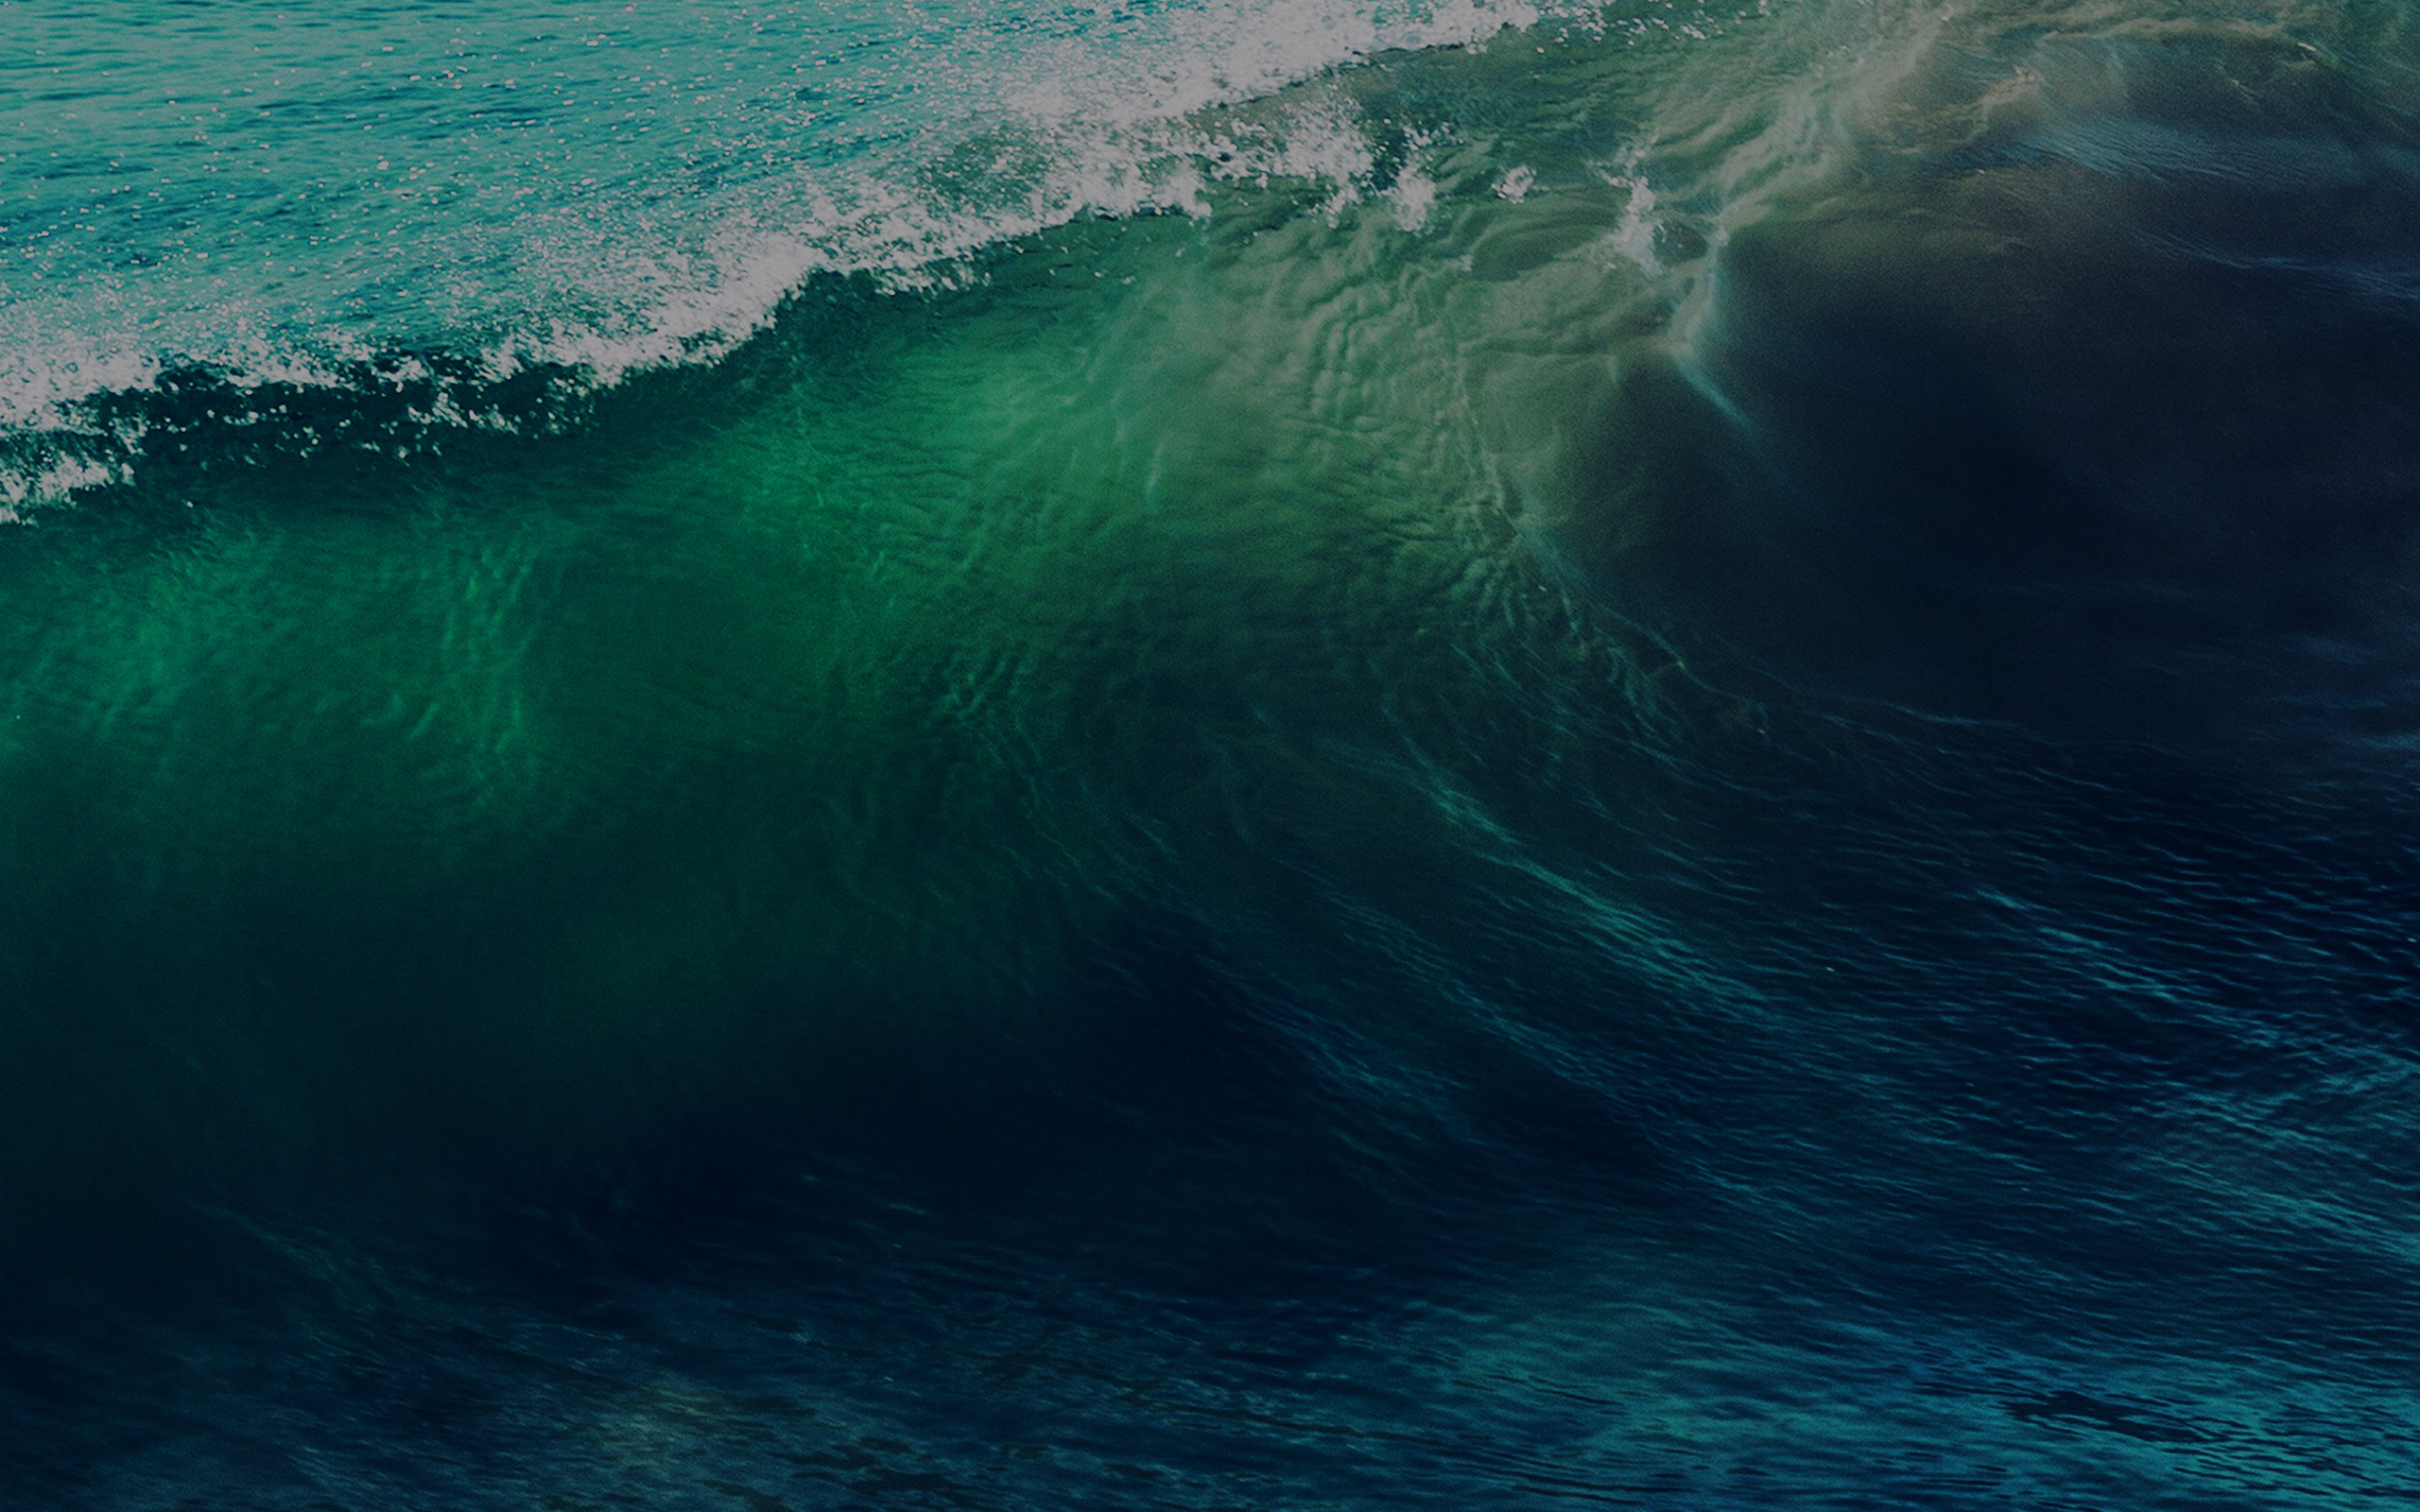 wallpaper for desktop, laptop. wave sea ocean summer blue dark